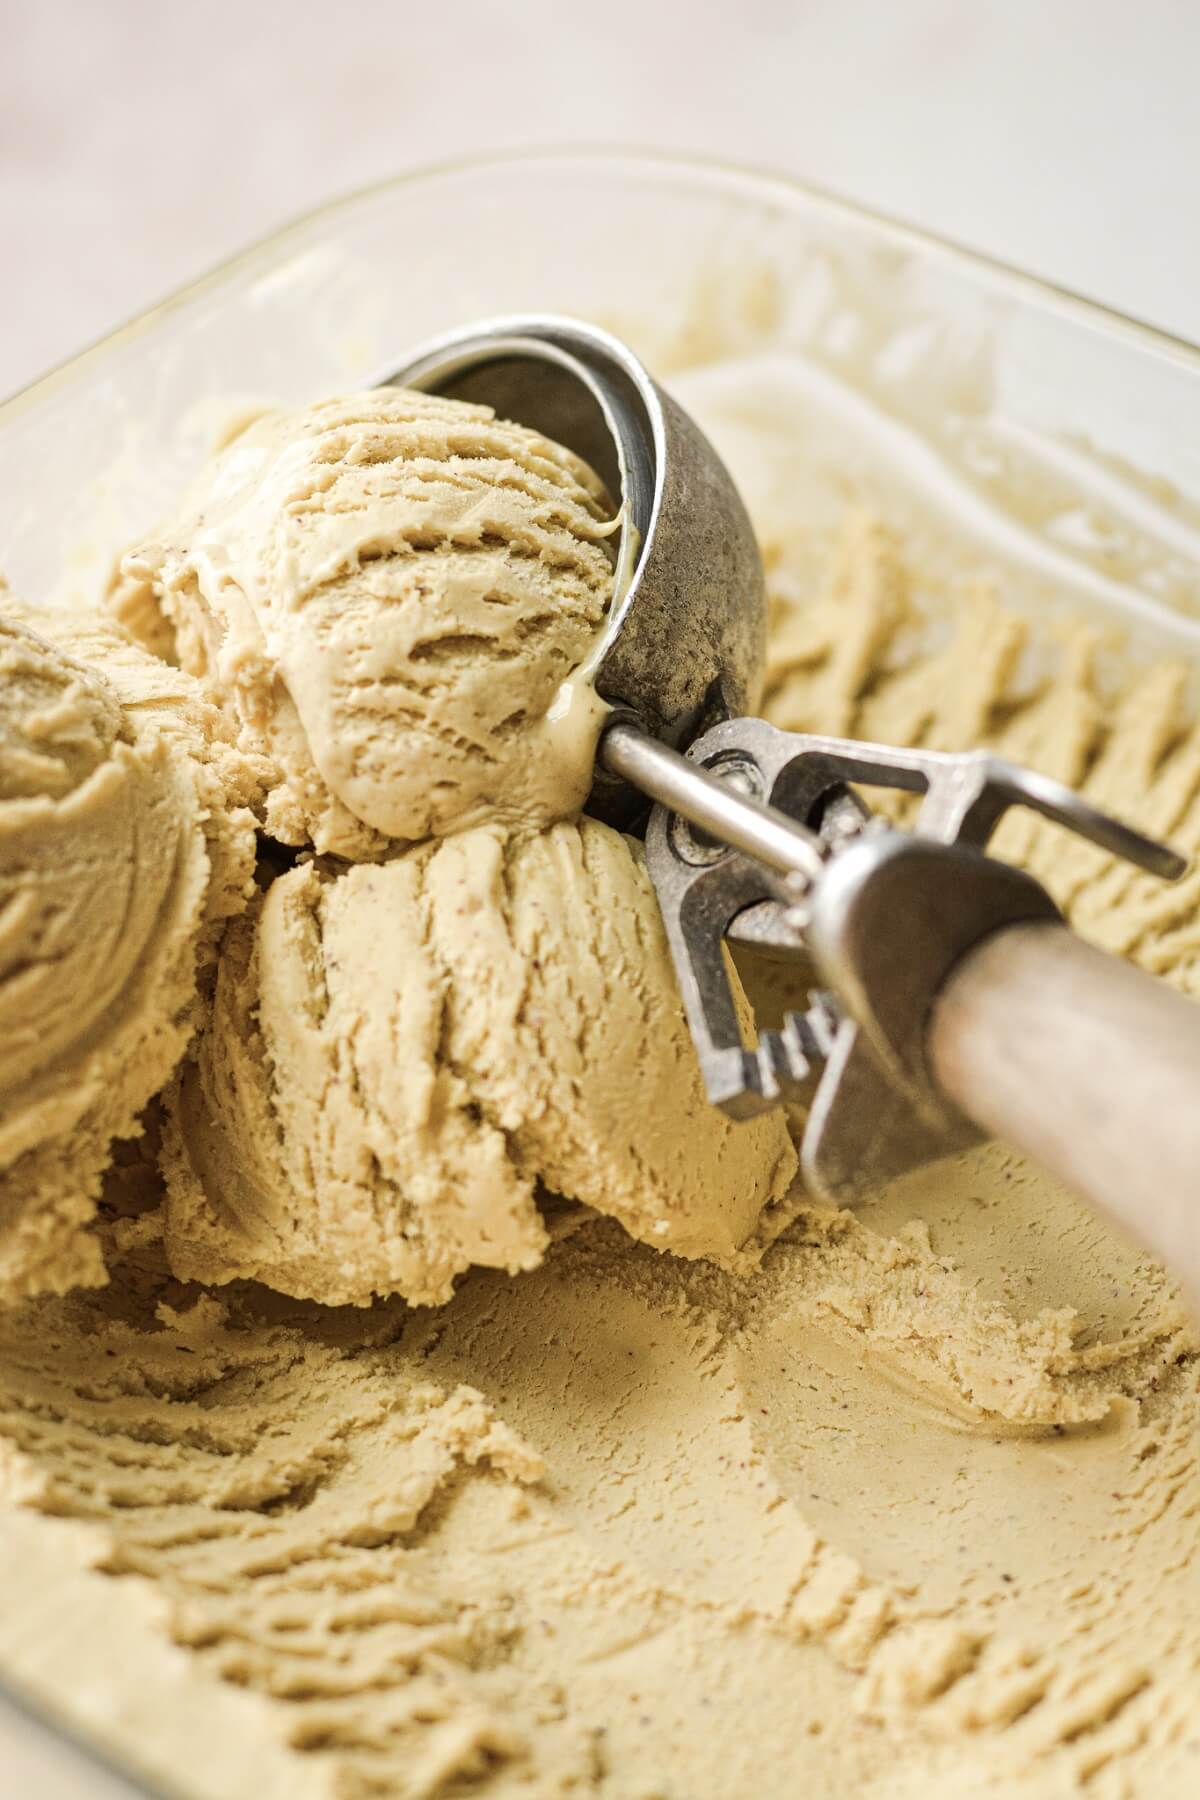 Scoops of no churn pistachio ice cream.